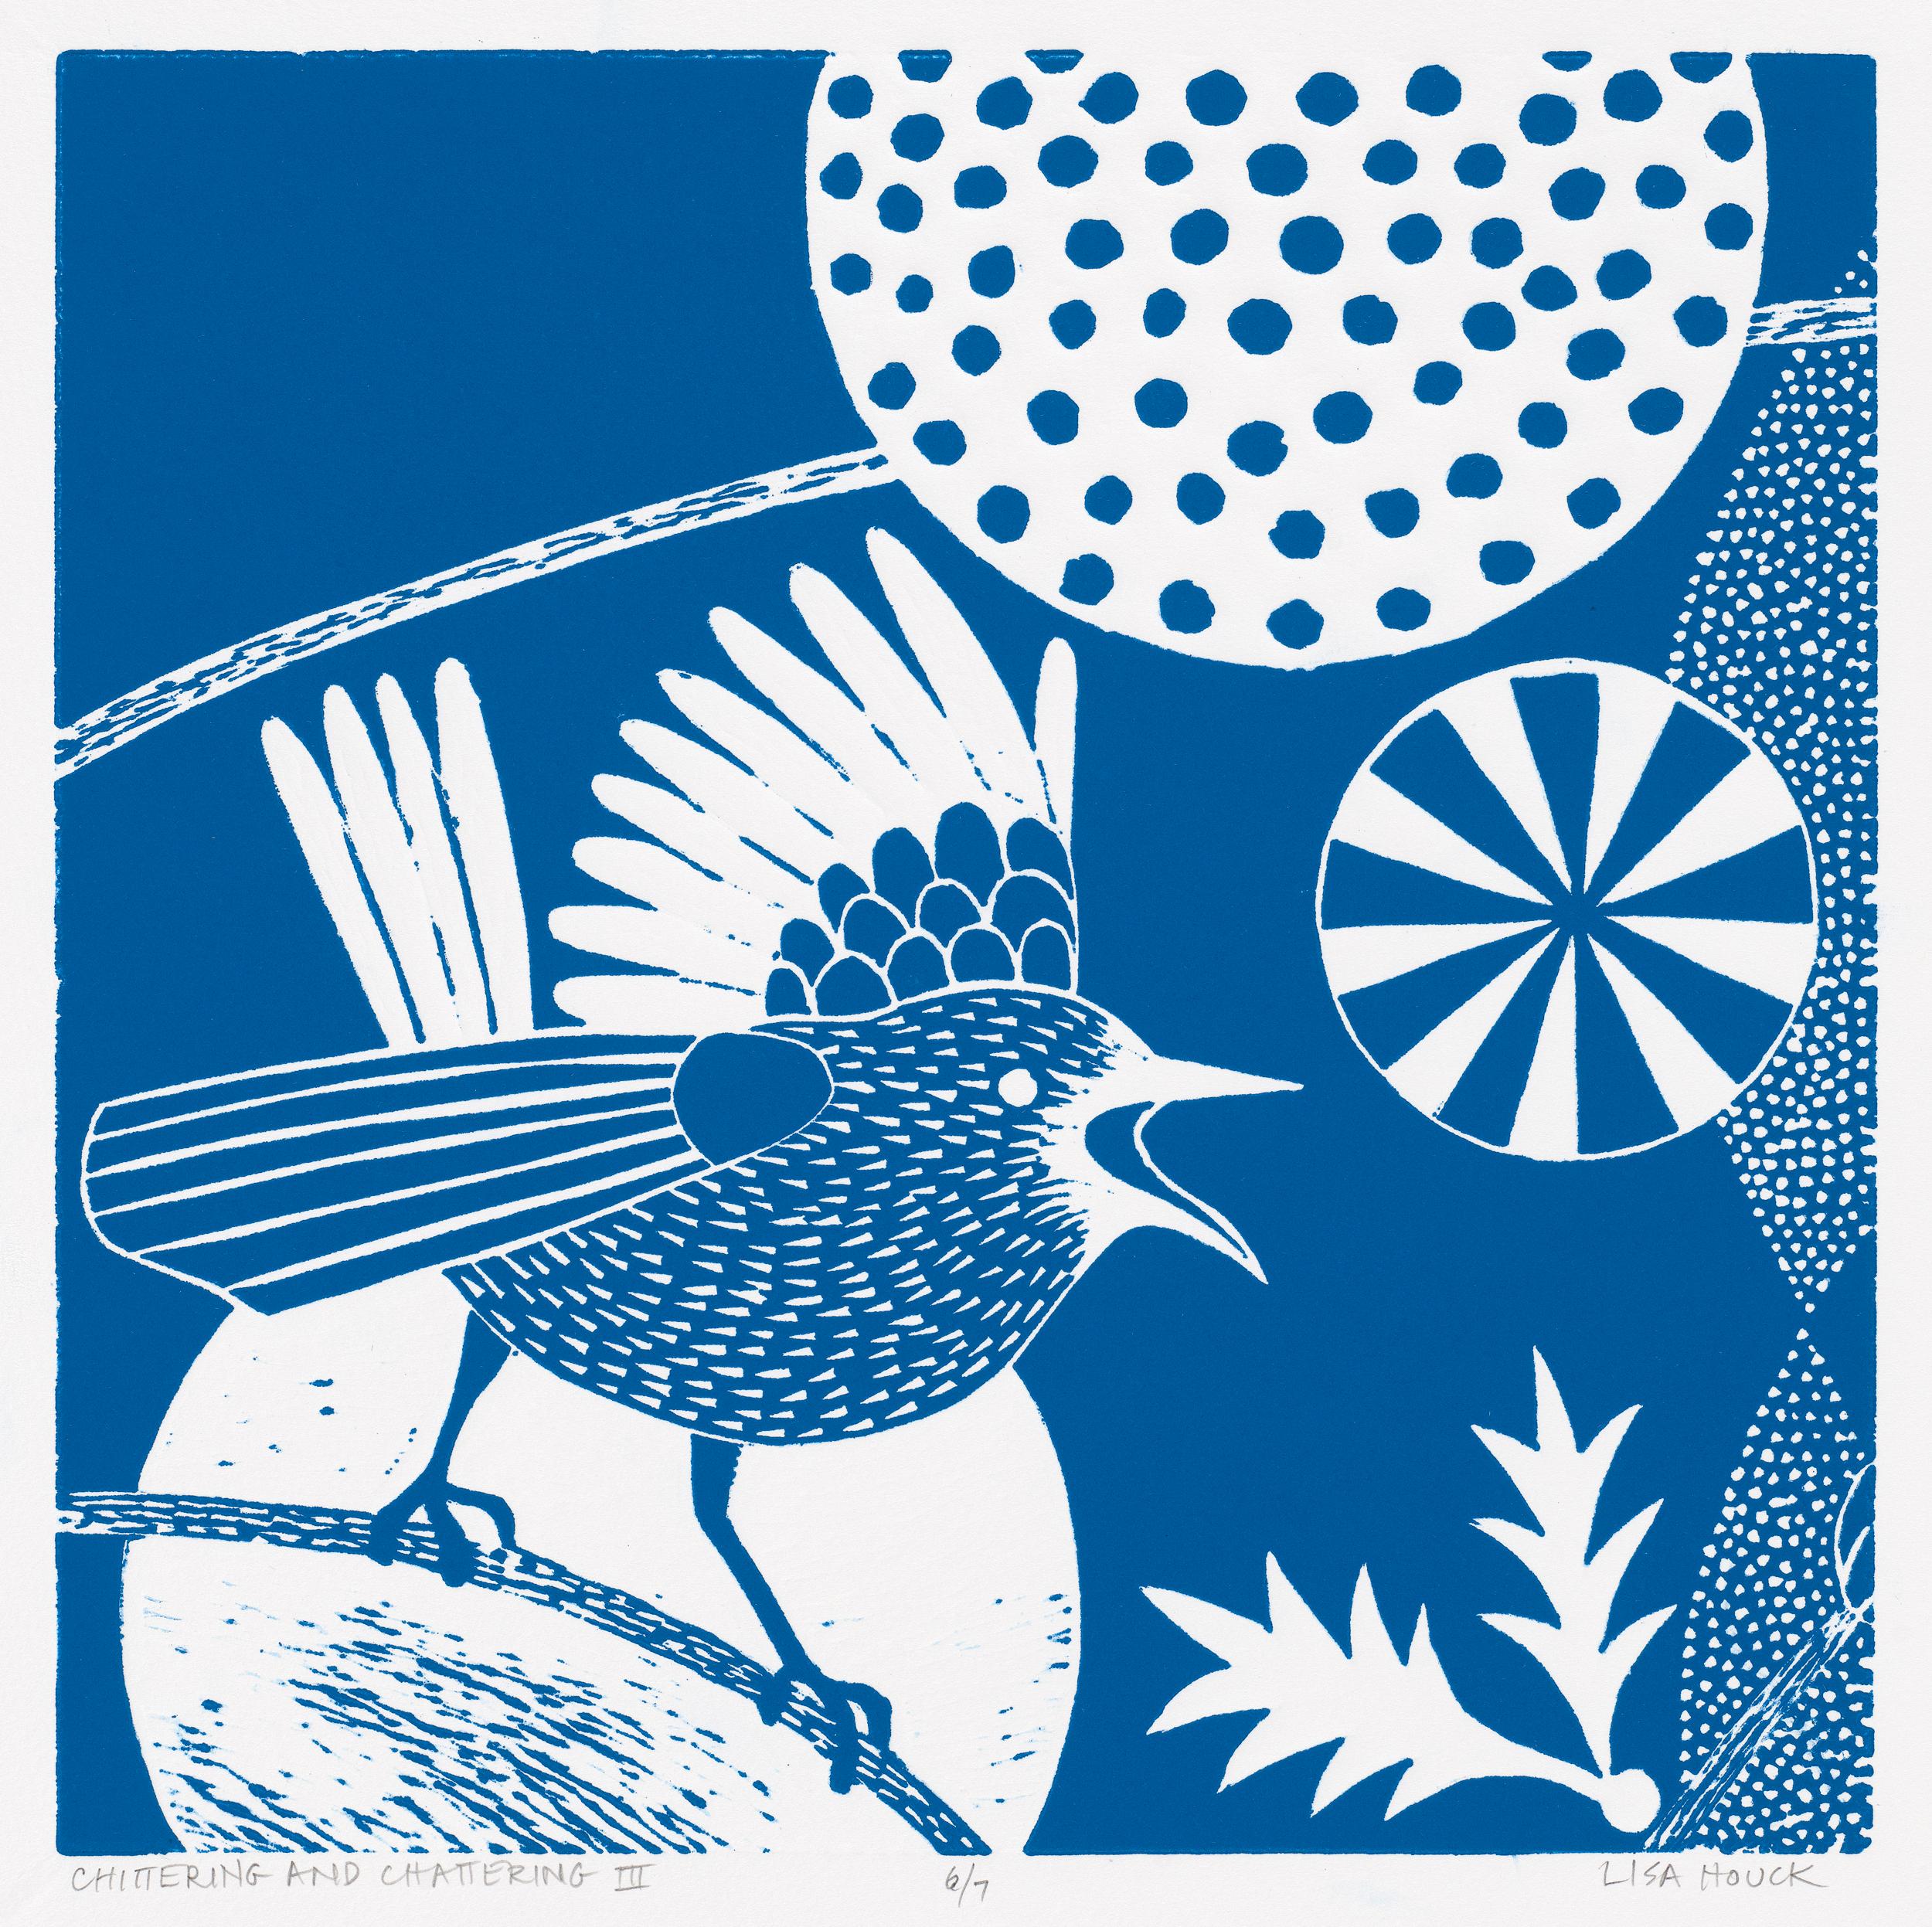 Lisa Houck Animal Print - "Chittering & Chattering III"  Folk inspired linocut bird series, blue and white